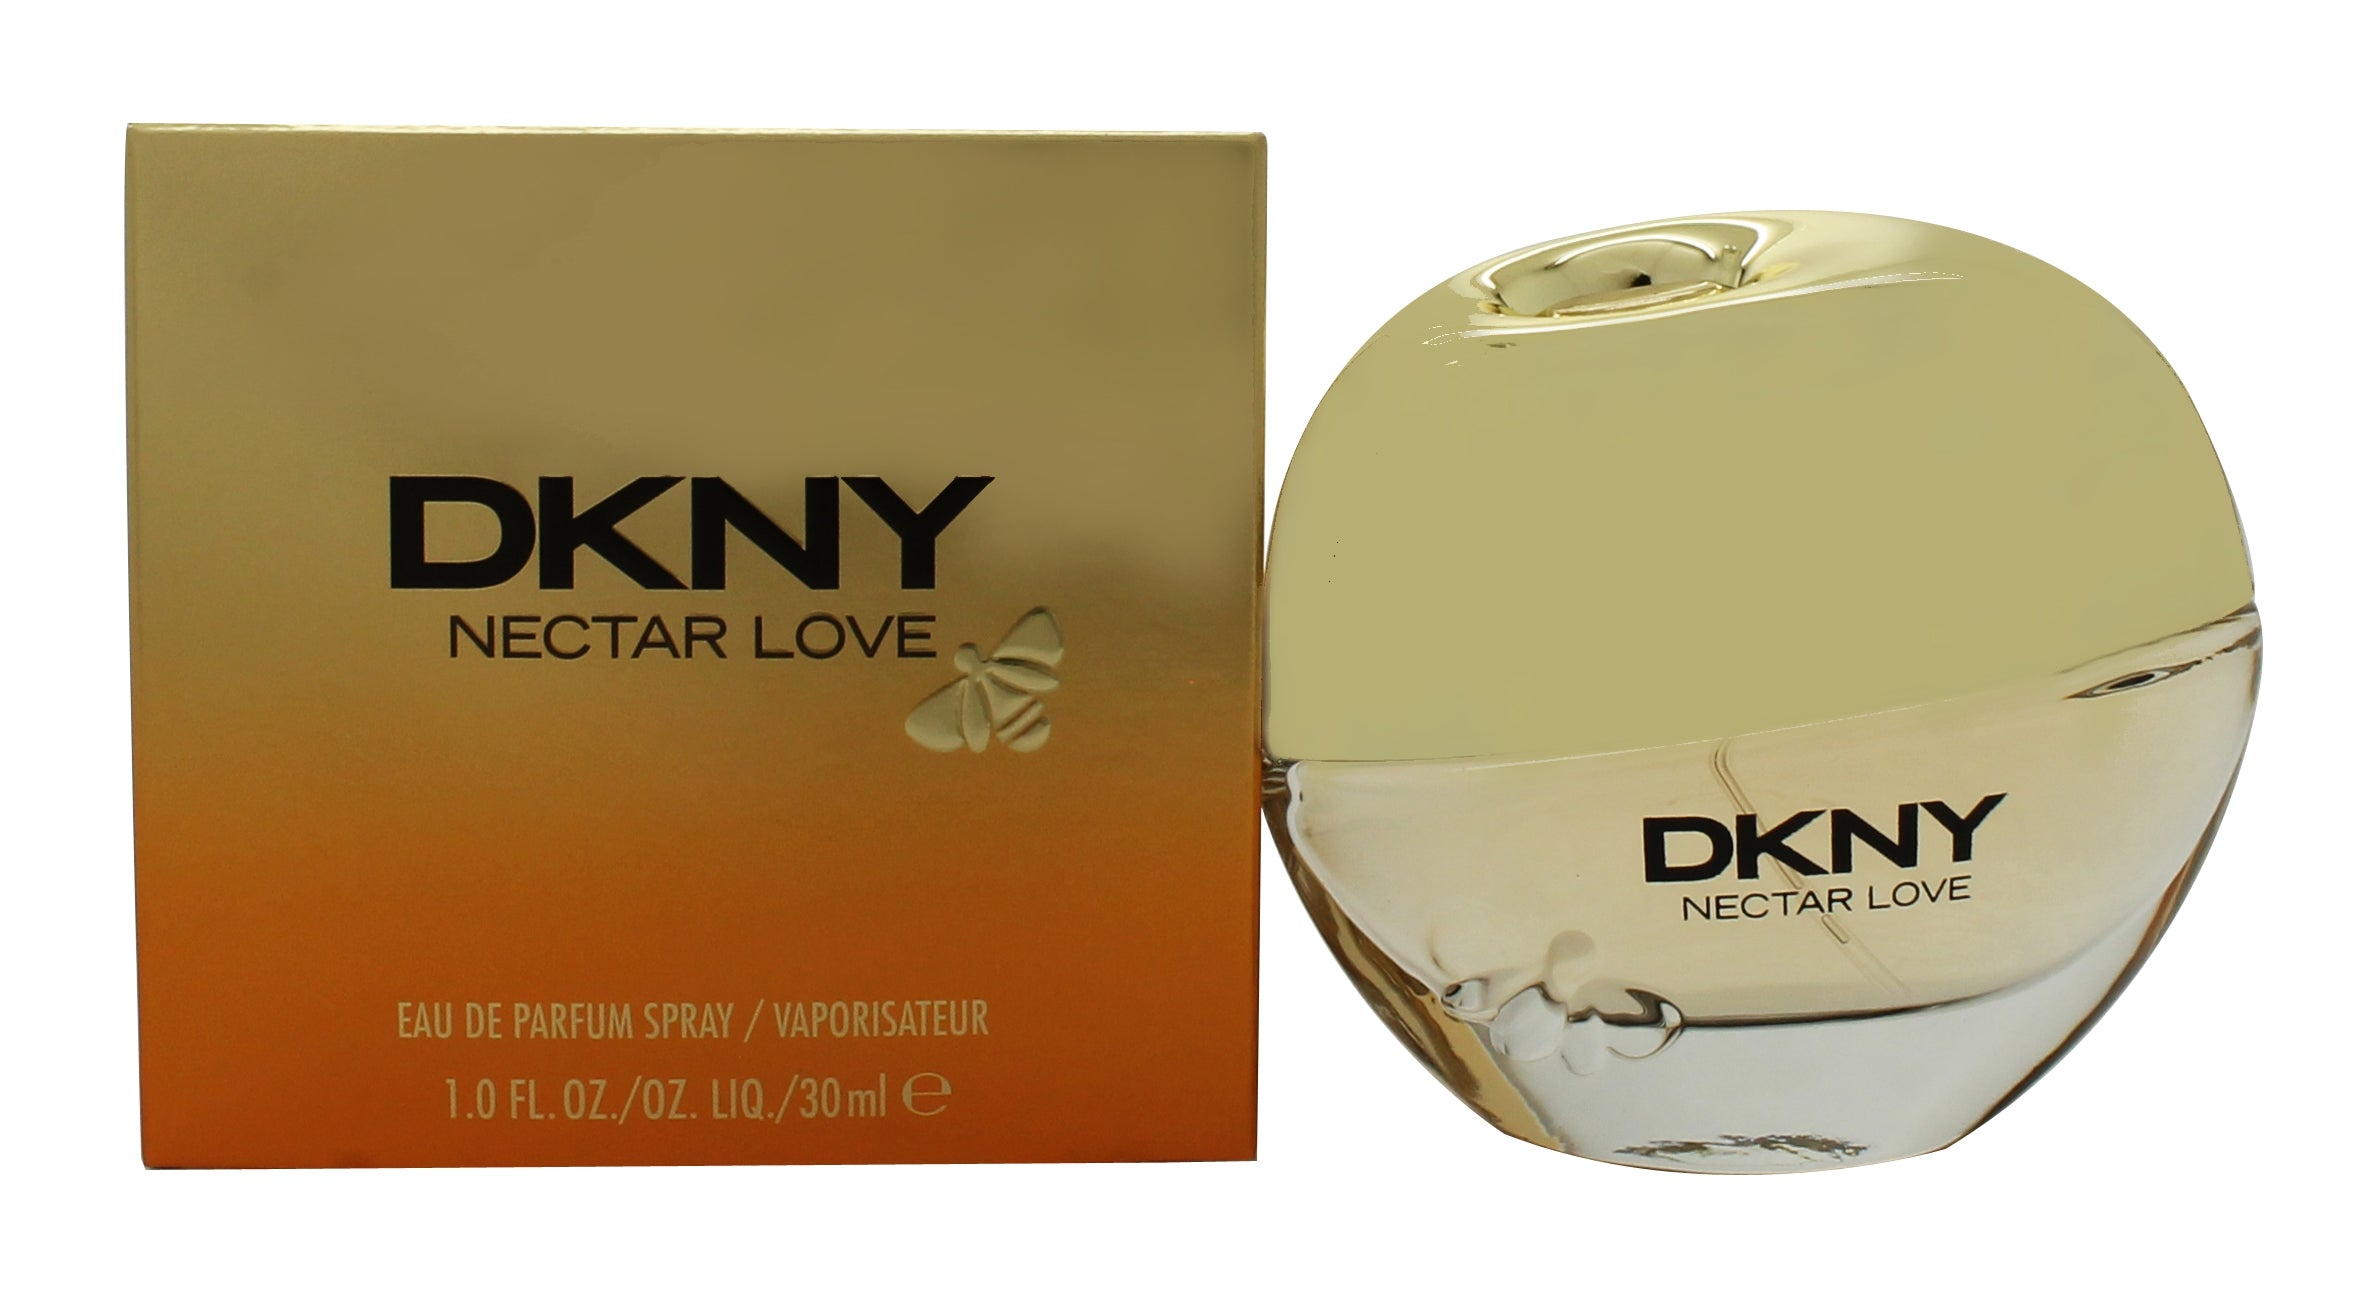 View DKNY Nectar Love Eau de Parfum 30ml Spray information